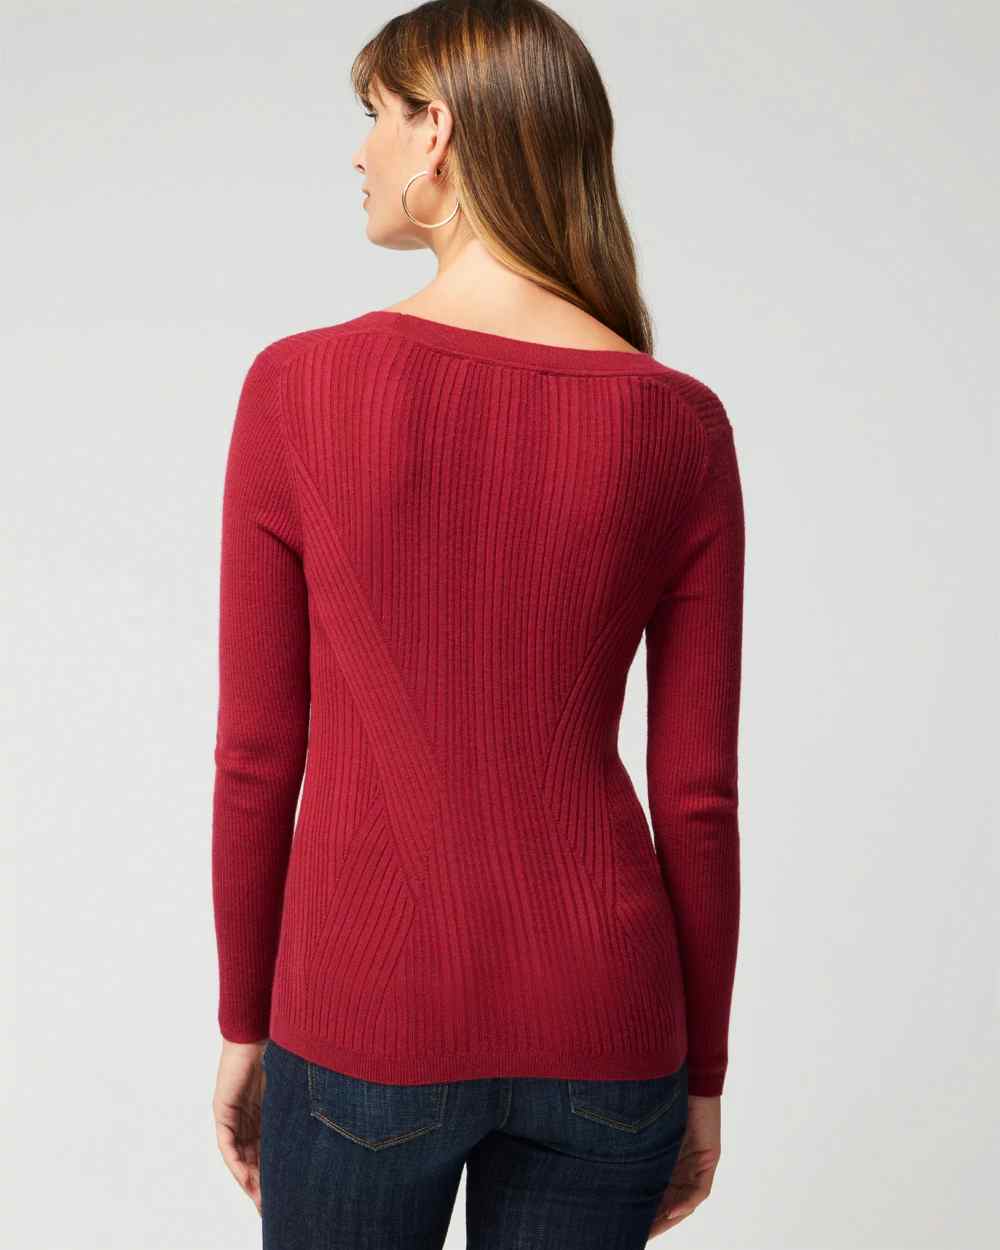 Shop Women's Winter Sweaters | White House Black Market